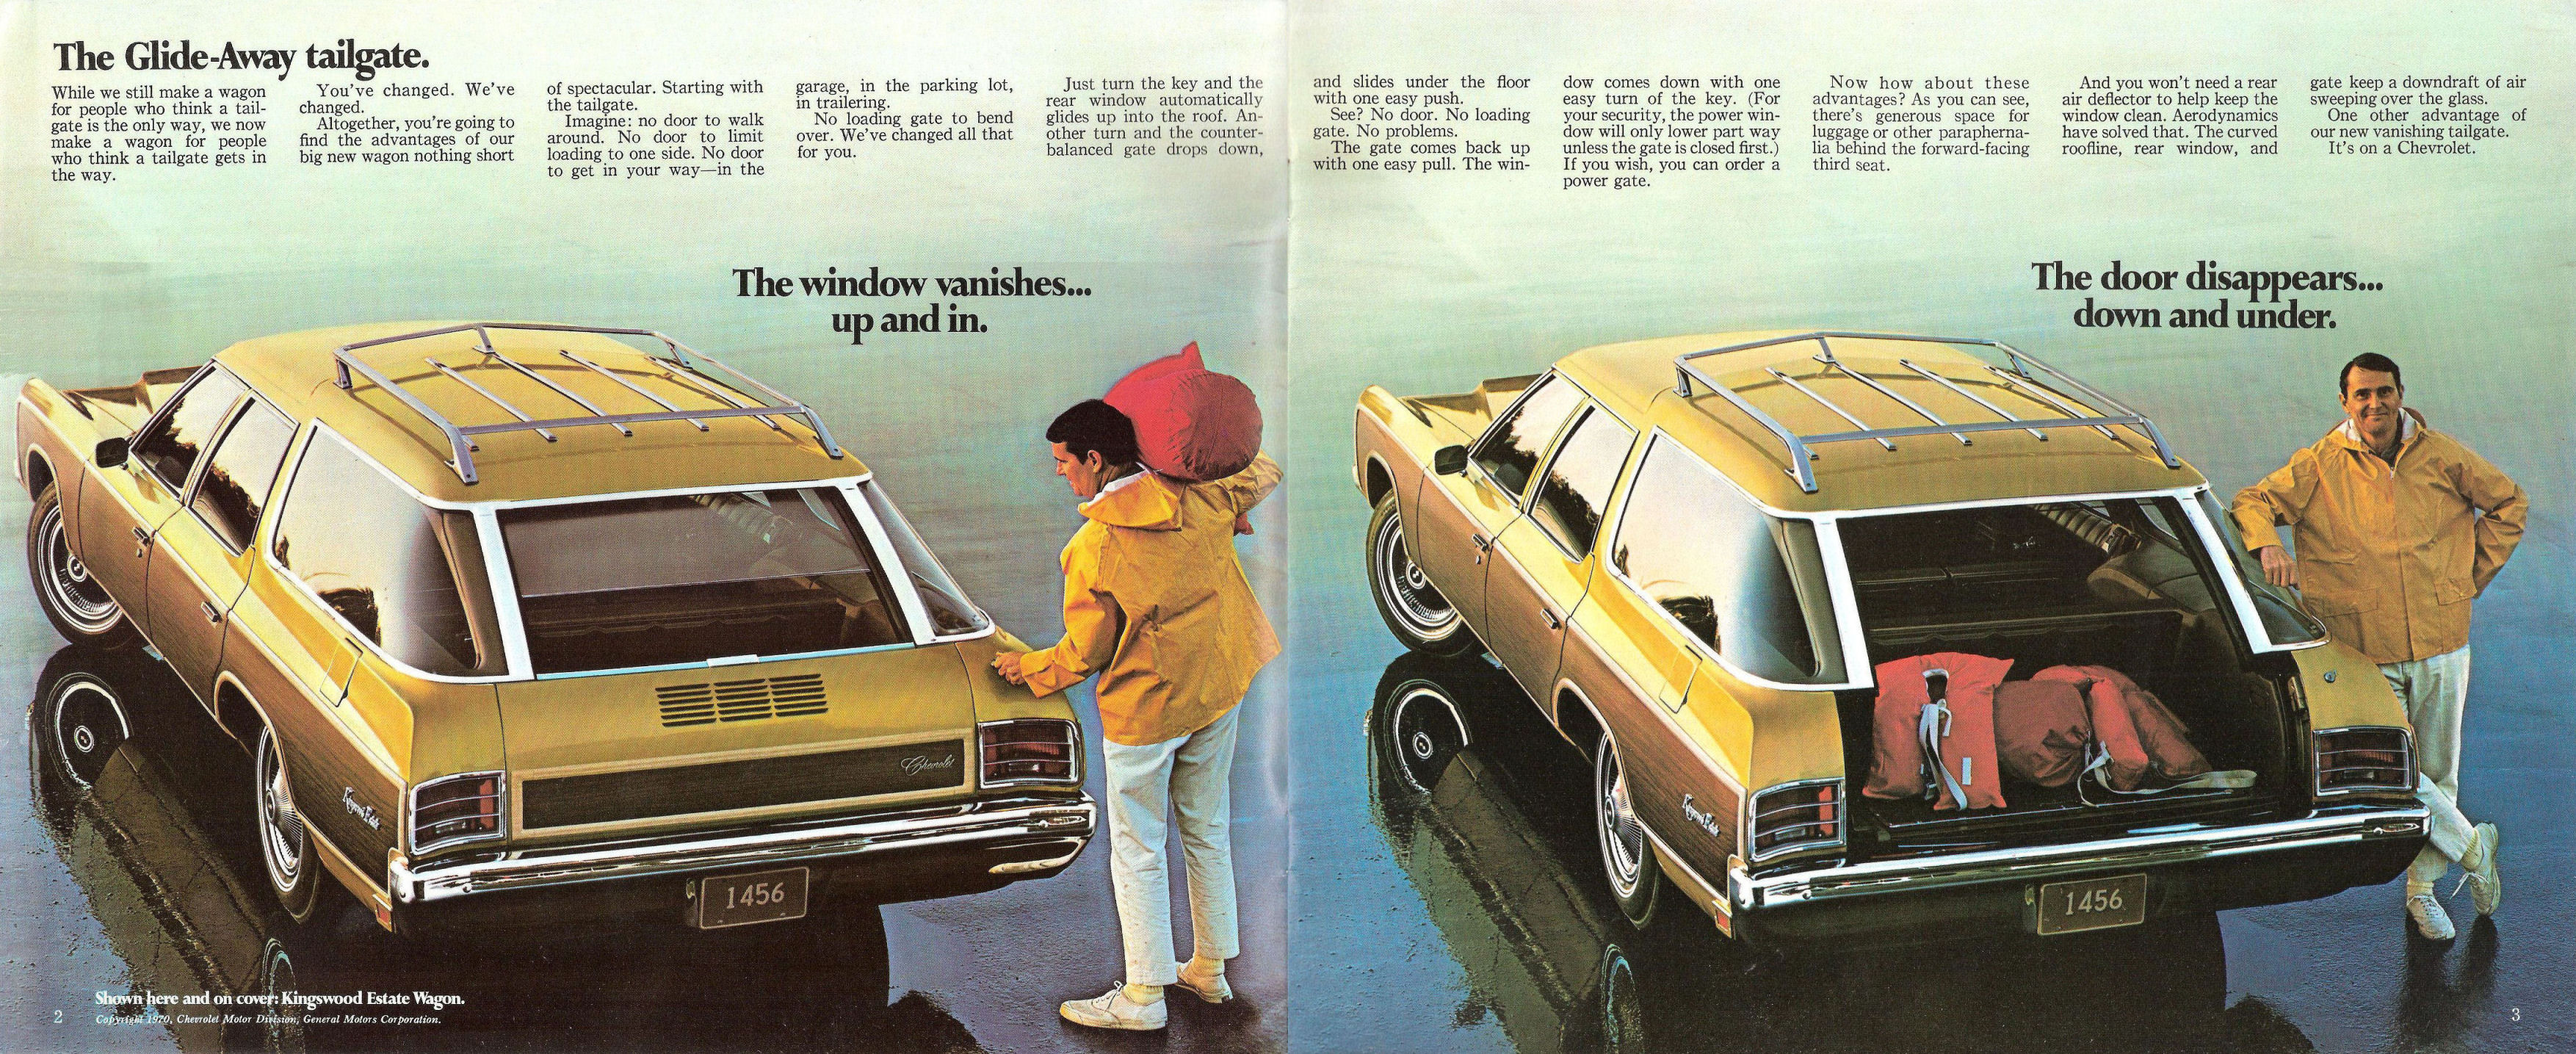 1971_Chevrolet_Wagons-02-03